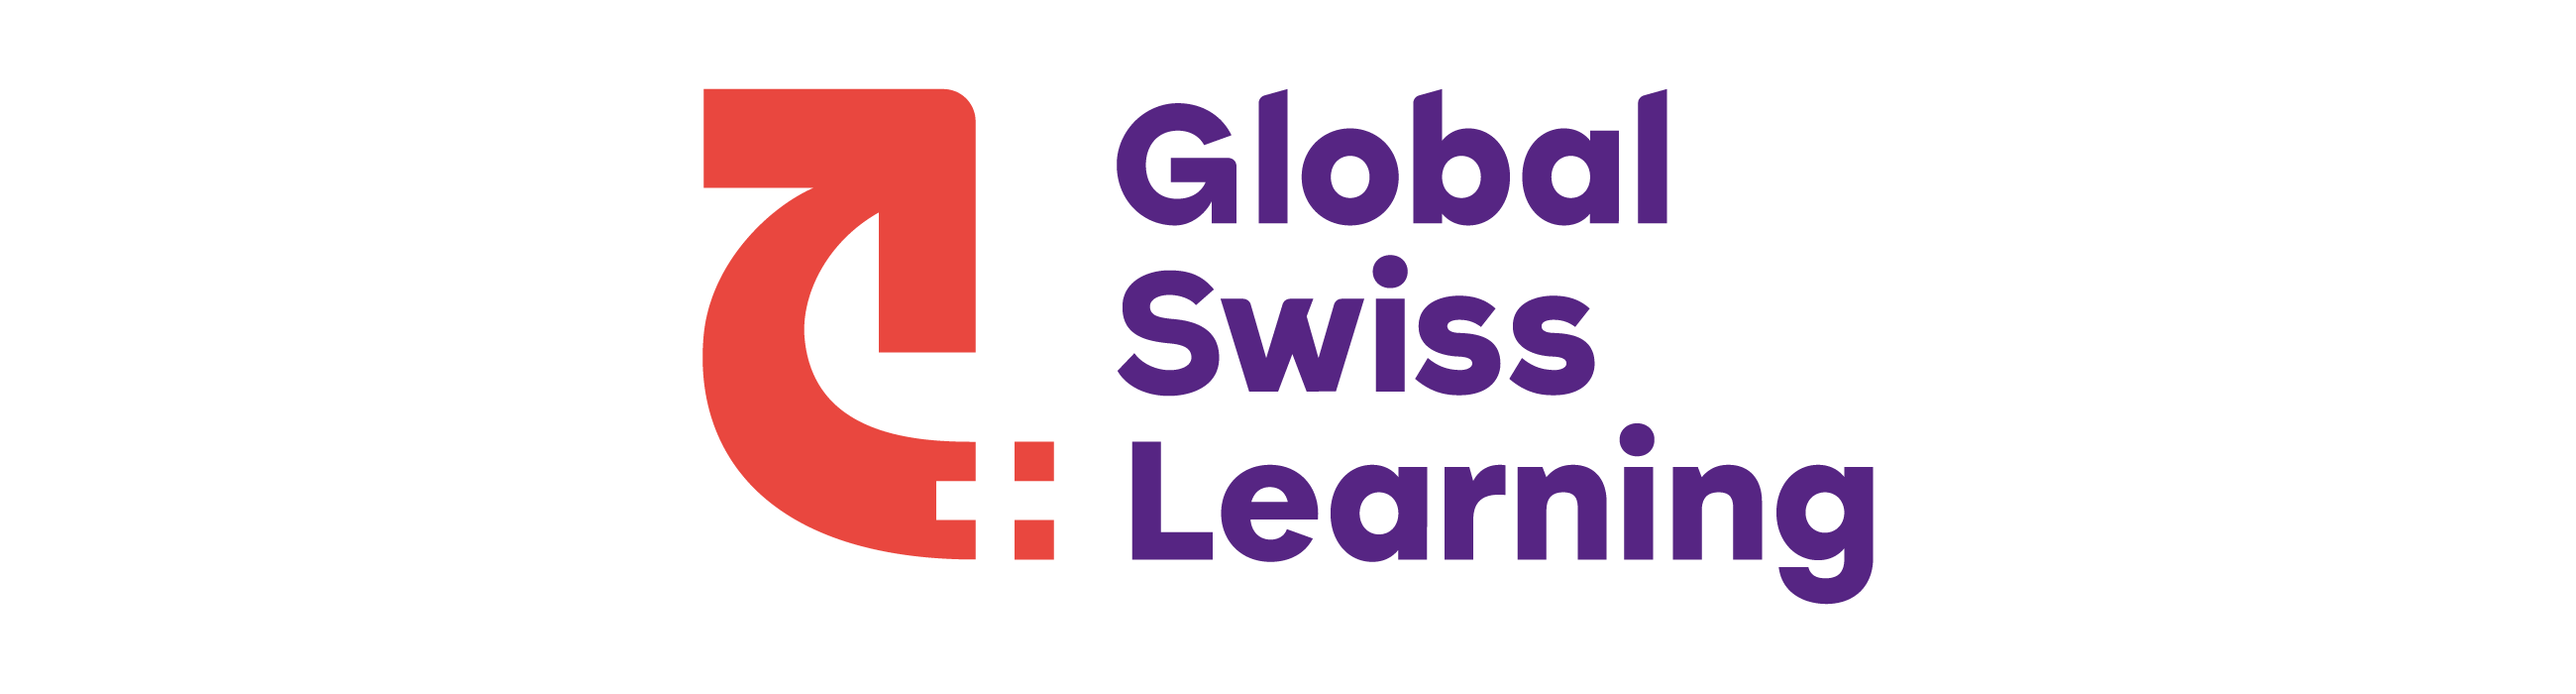 global swiss learning